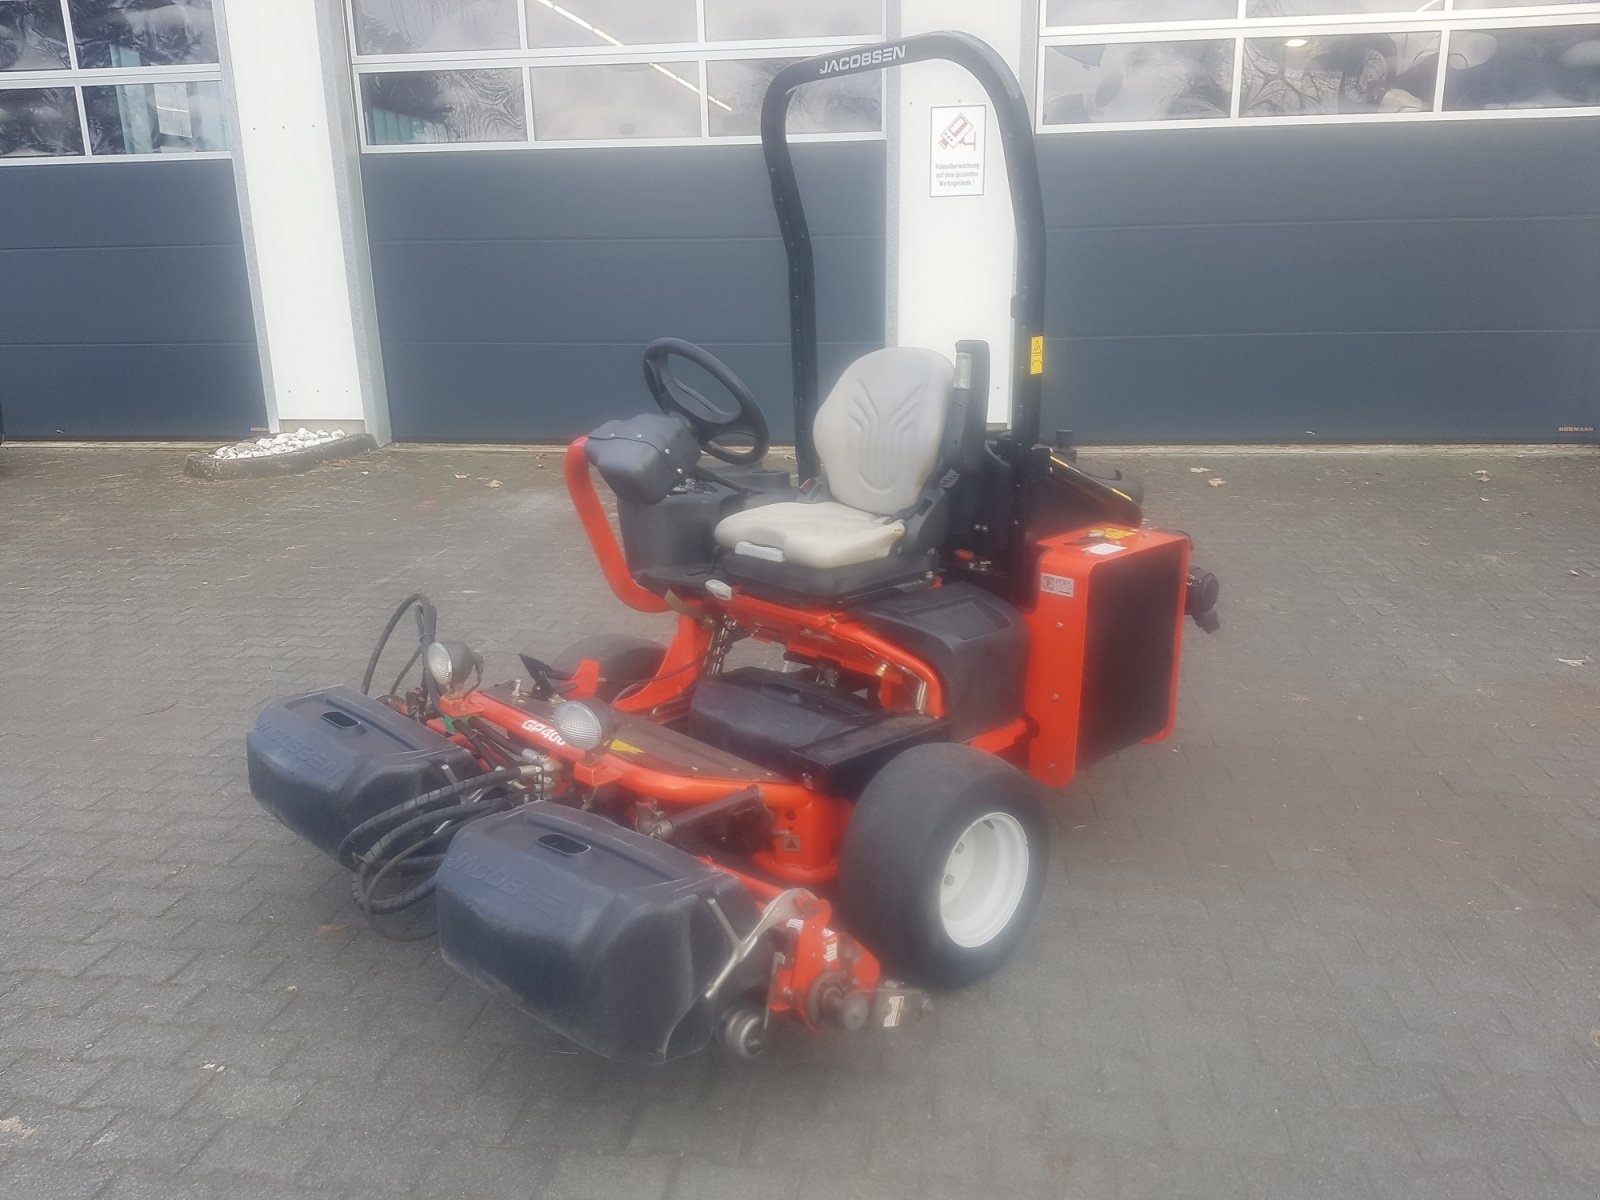 Jacobsen gp400 lawn_mower 13 400 €